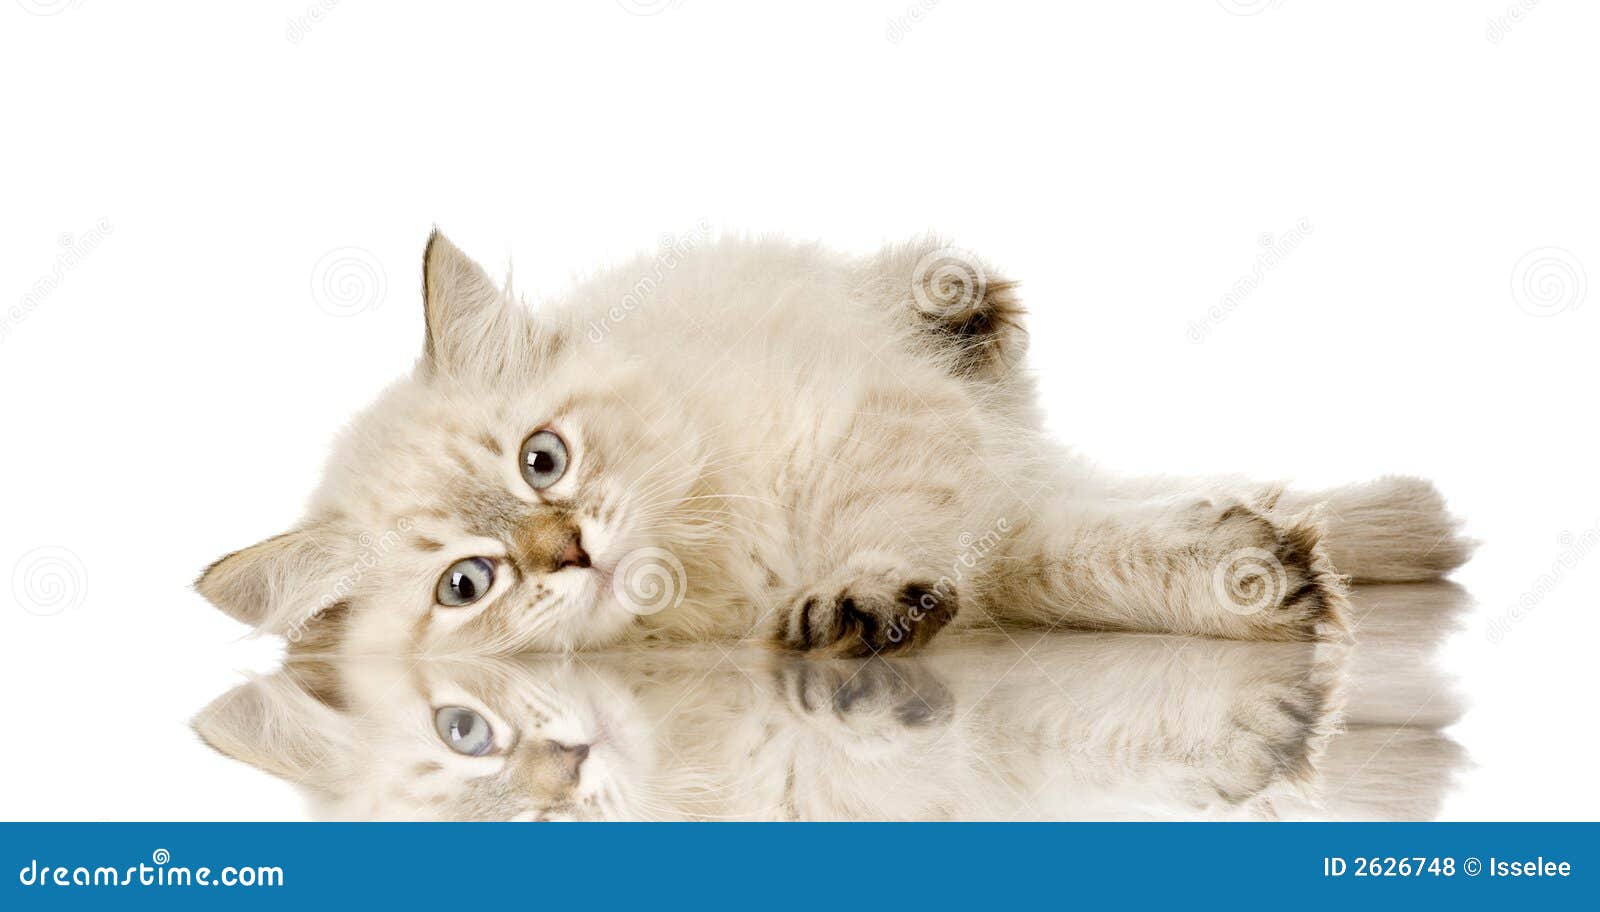 blu-tabby-point birman kitten